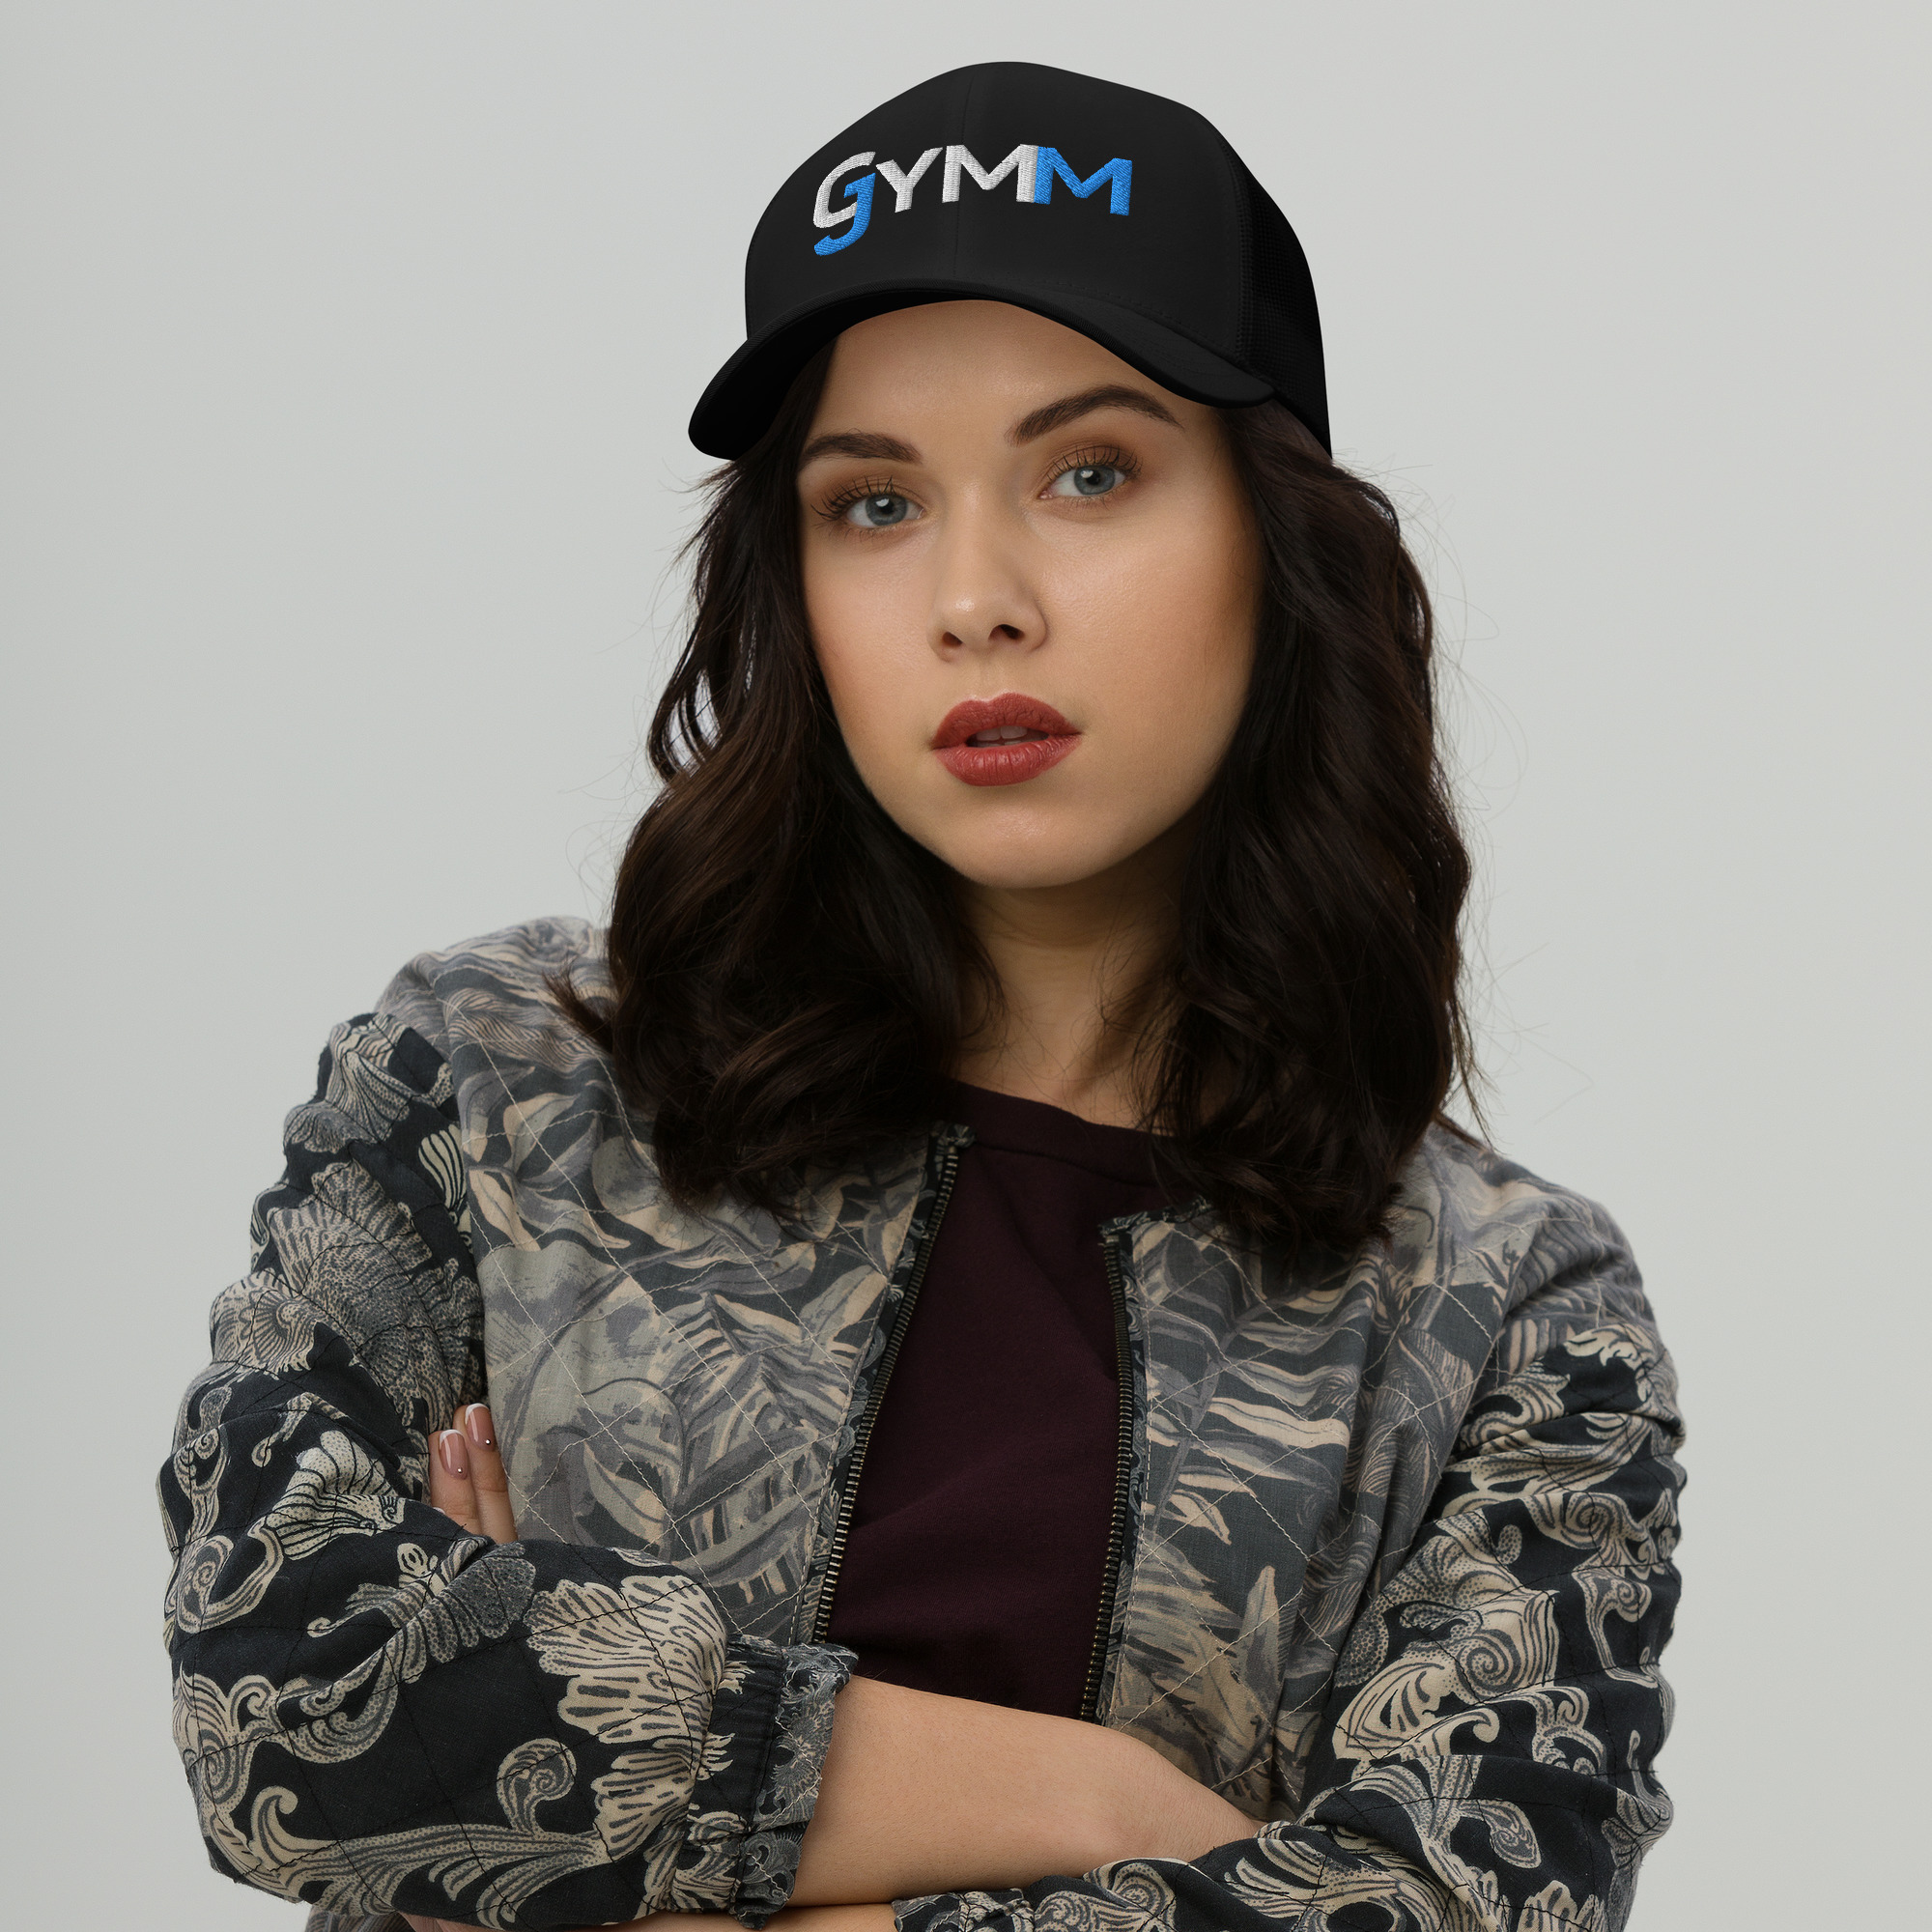 Gym Jymm Logo Snapback Hat